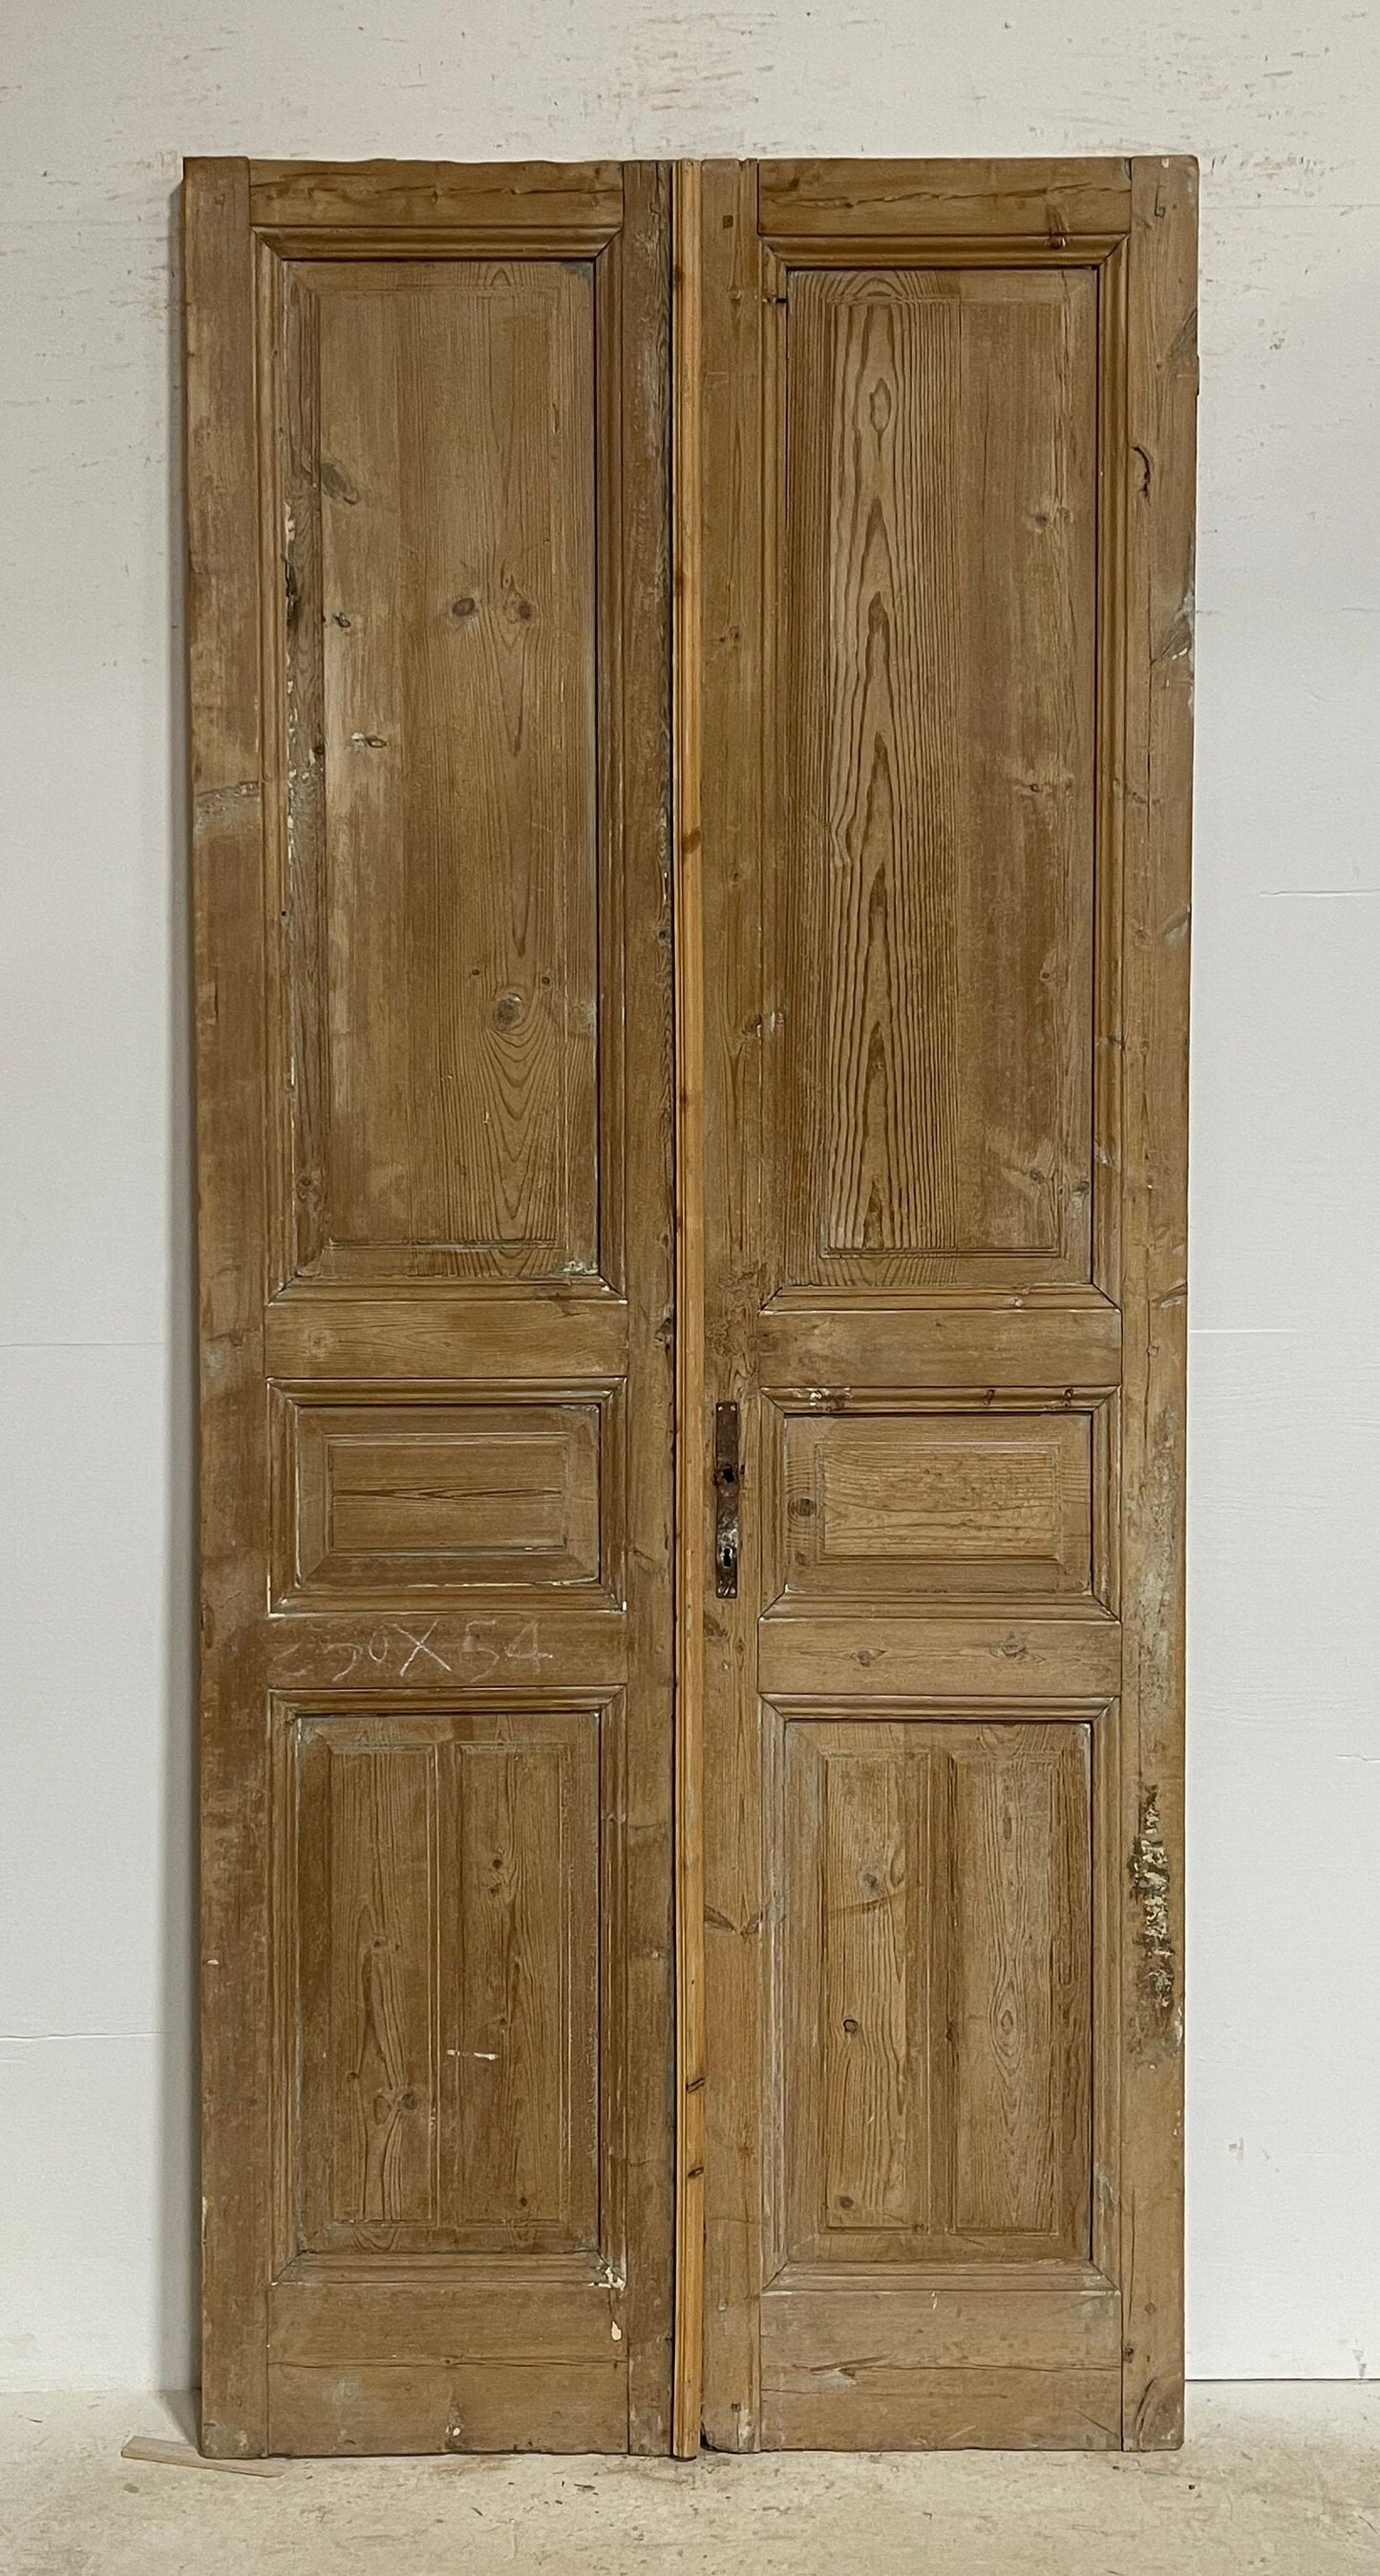 Antique French panel doors (97.5x42.5) G0200s